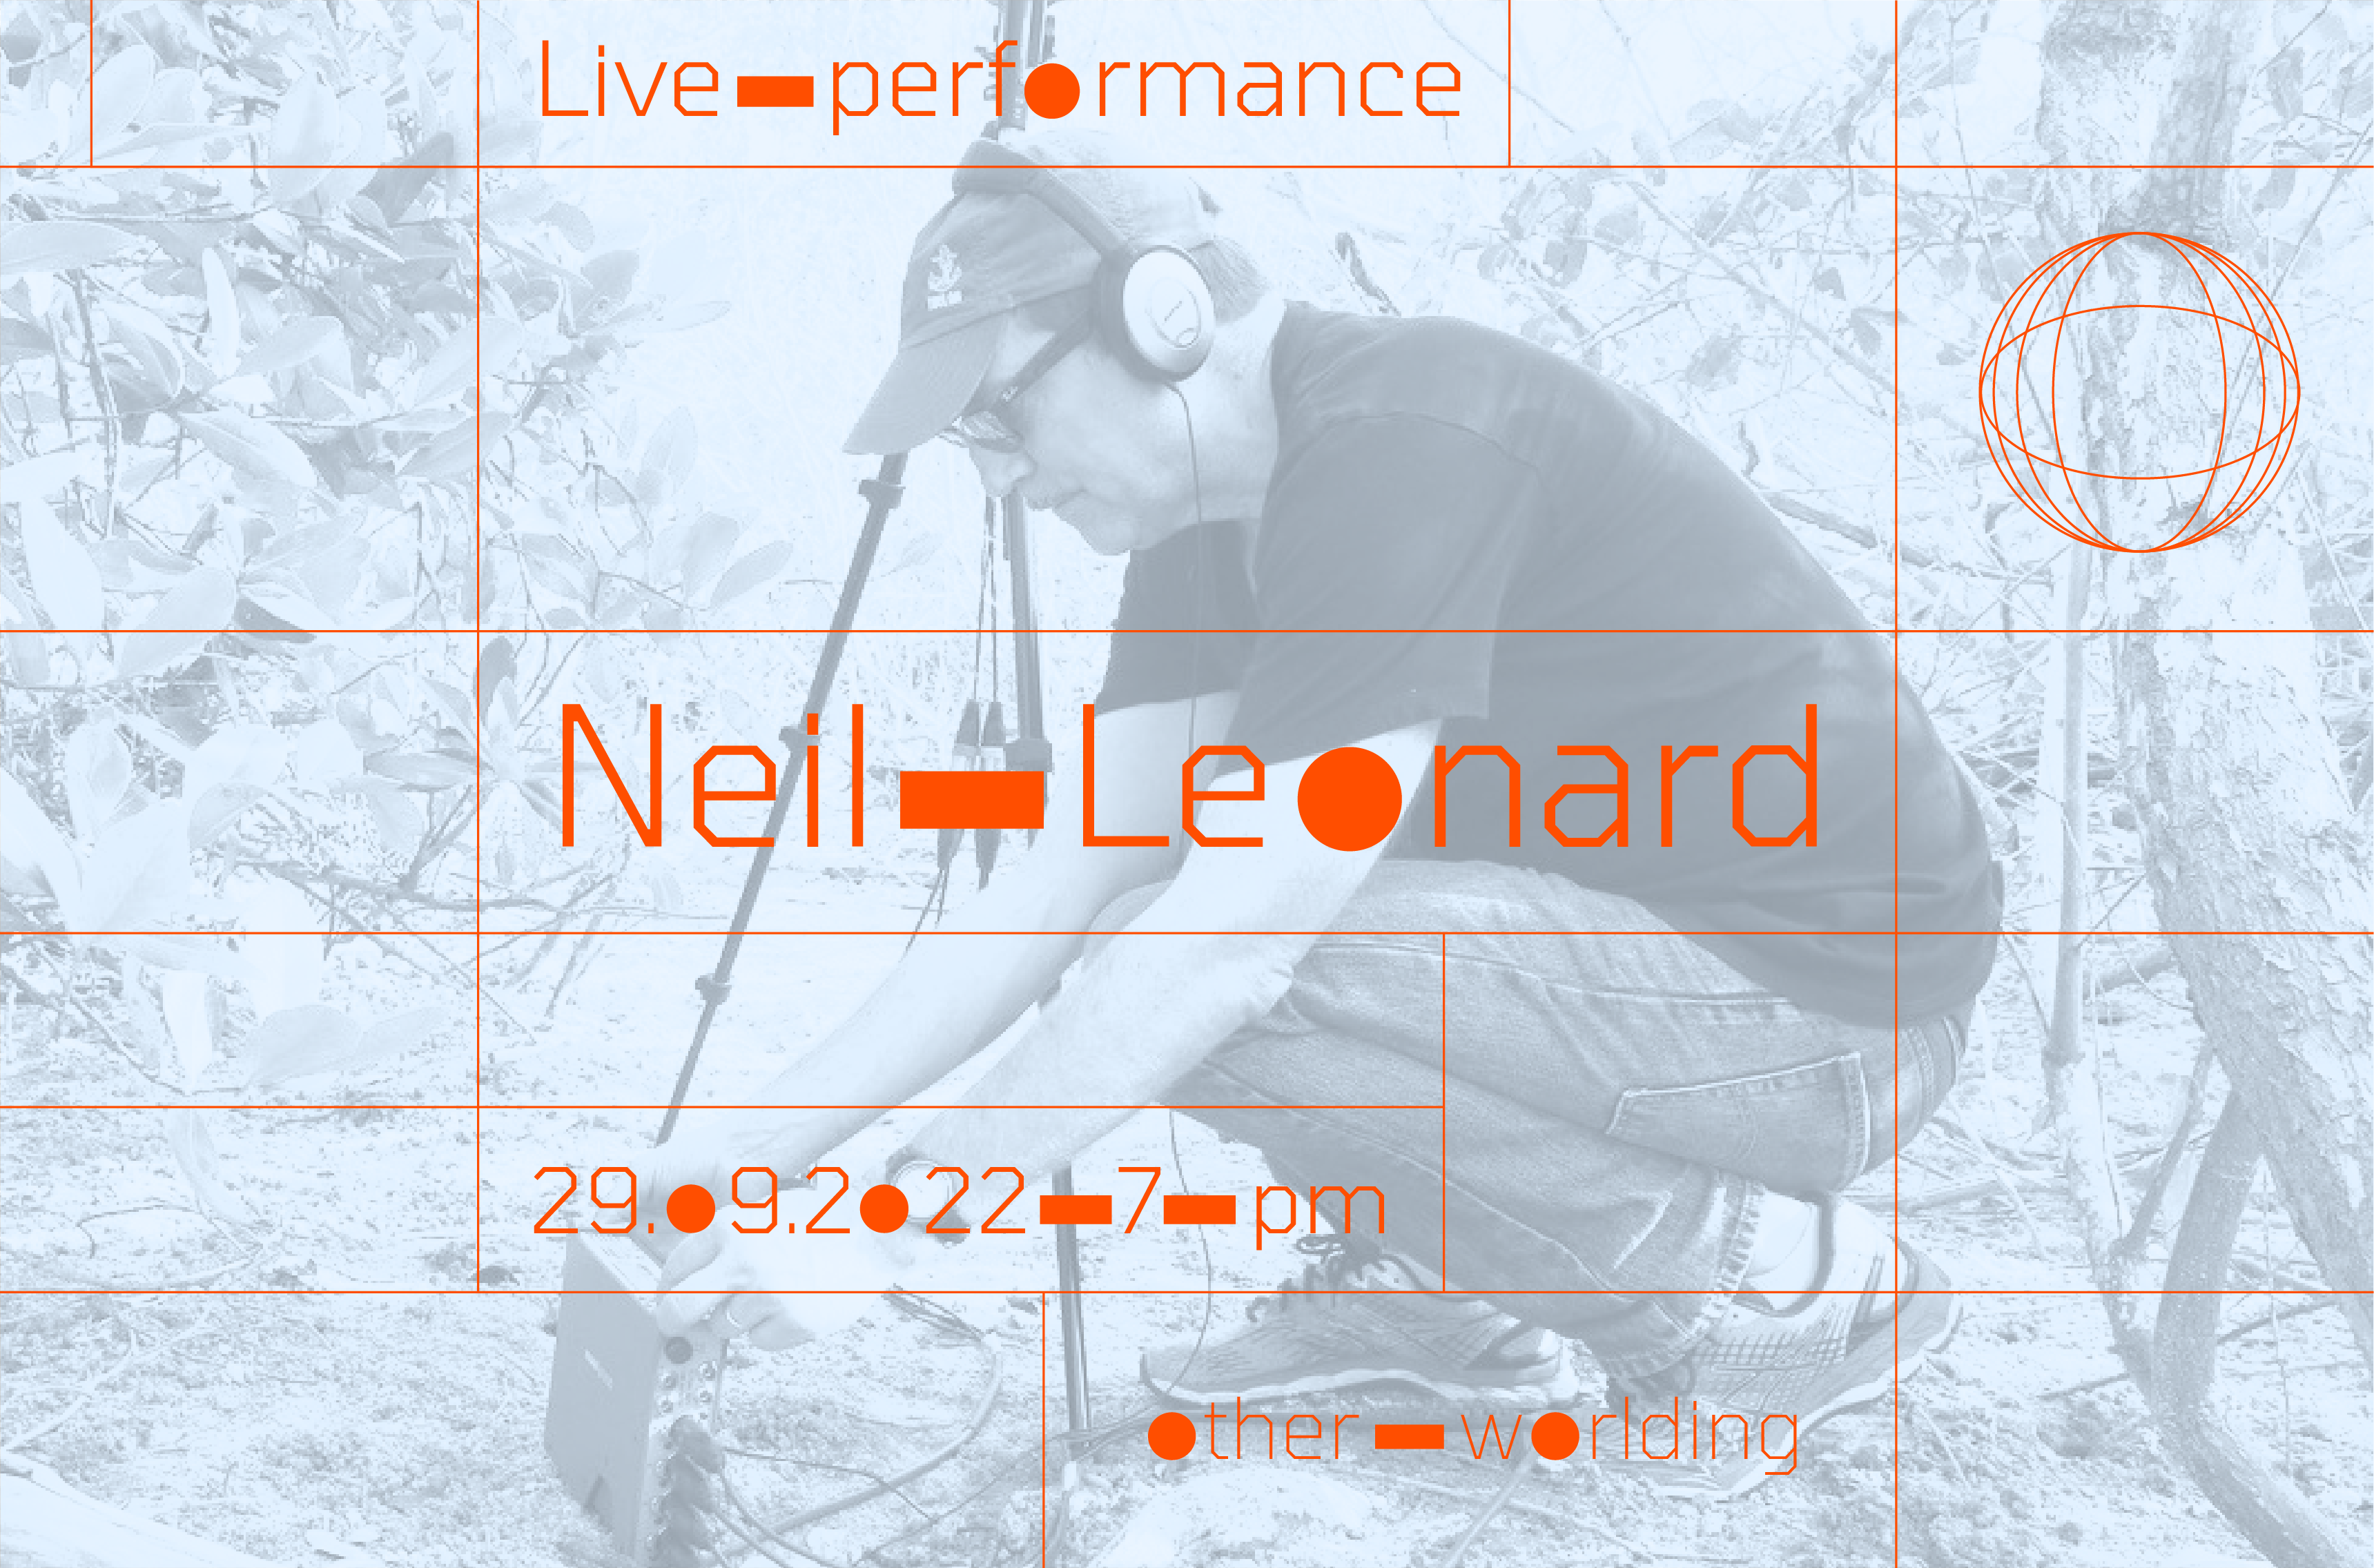 Neil Leonard